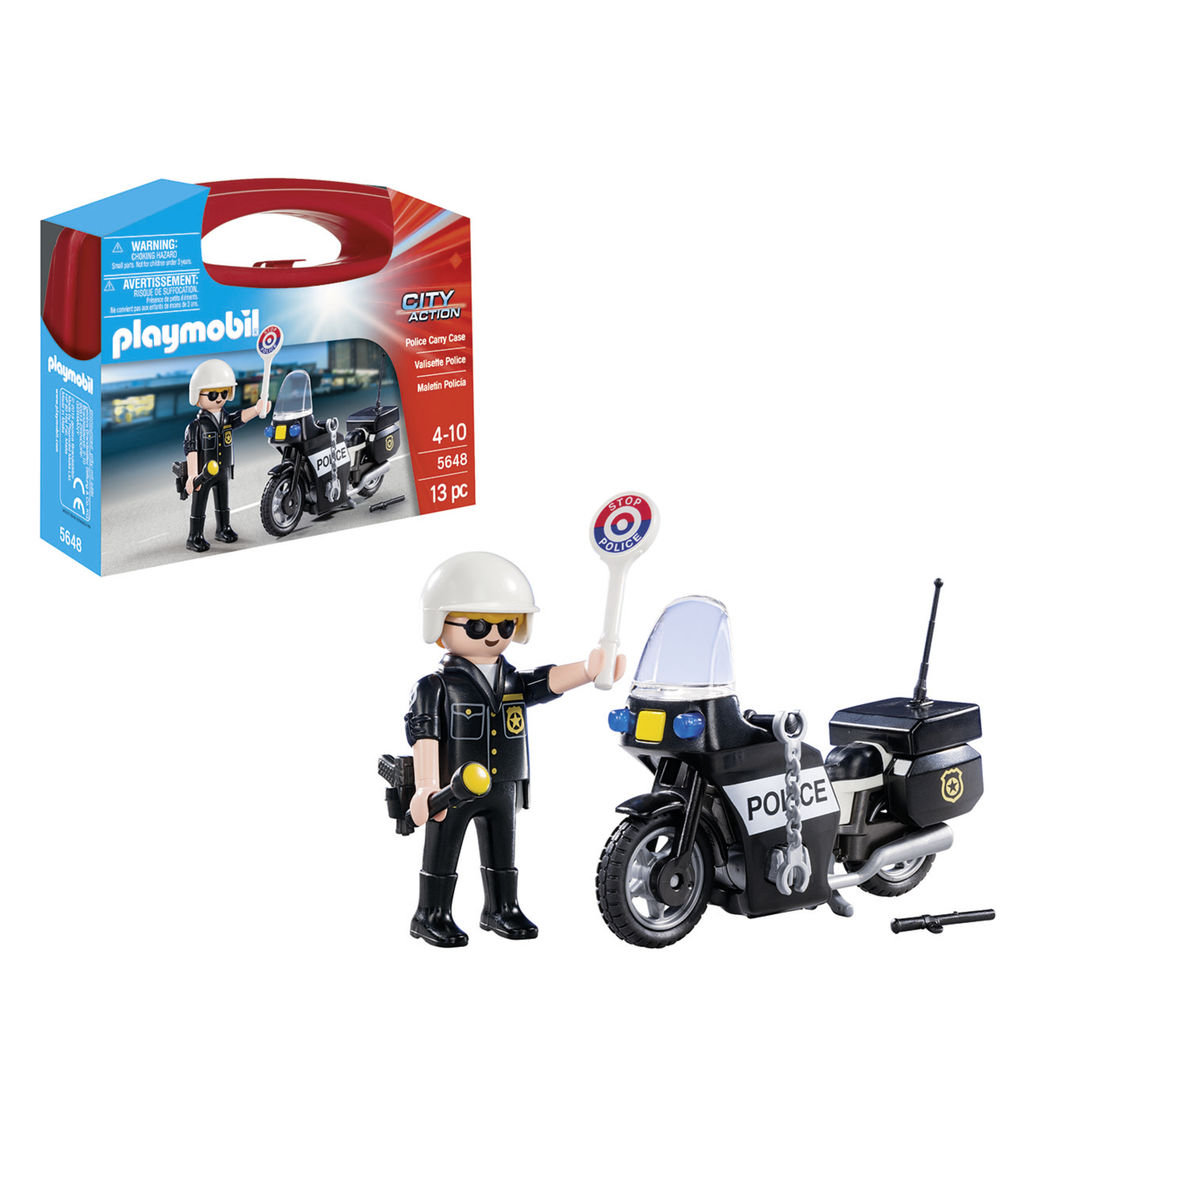 Playmobil City Action Valisette Motard de Police